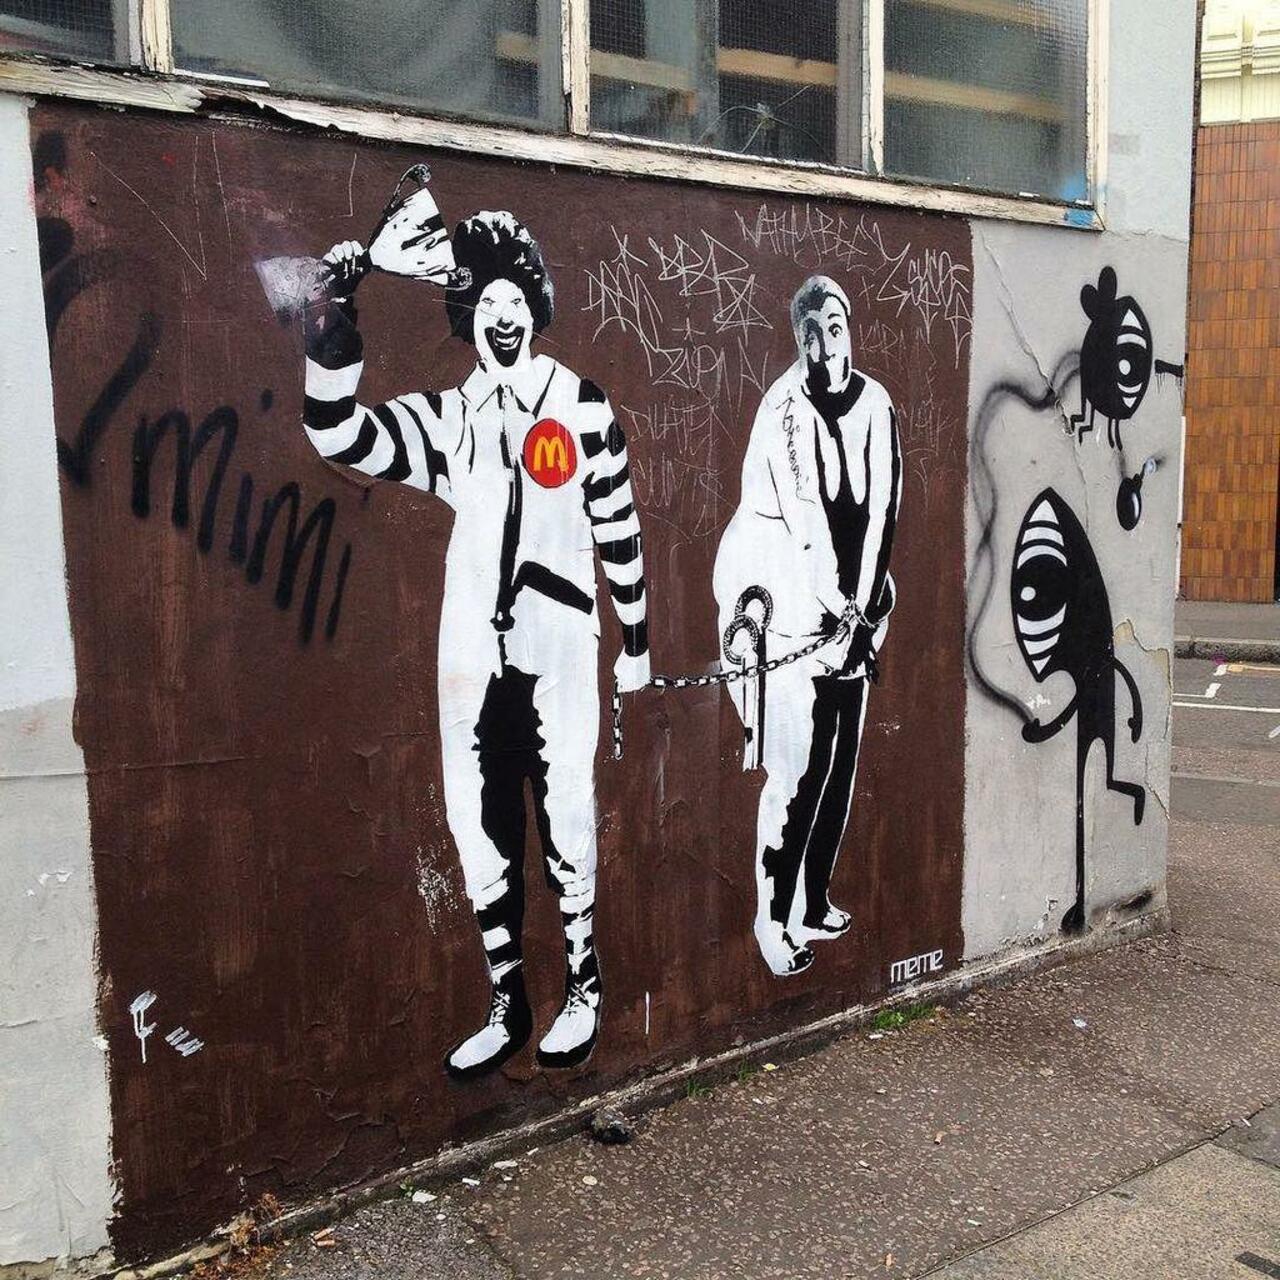 #streetart #graffiti #streetartlondon #london #thisislondon by isadarko http://t.co/aL2SBtGIlQ